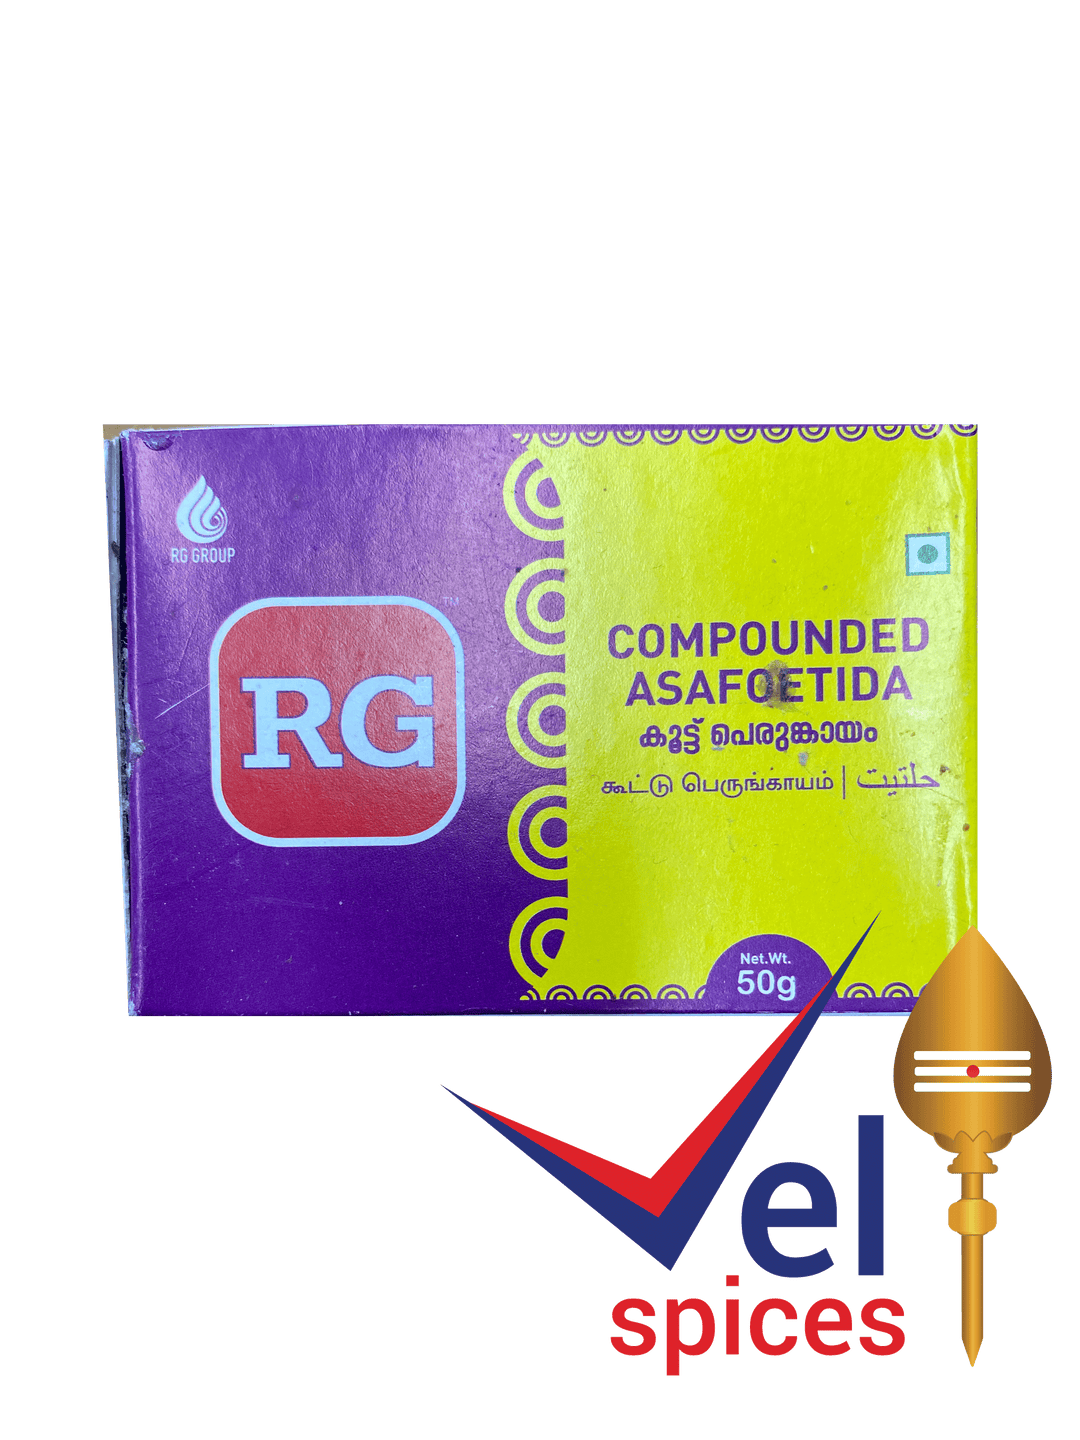 Rg Compounded Asafoetida Block 50G